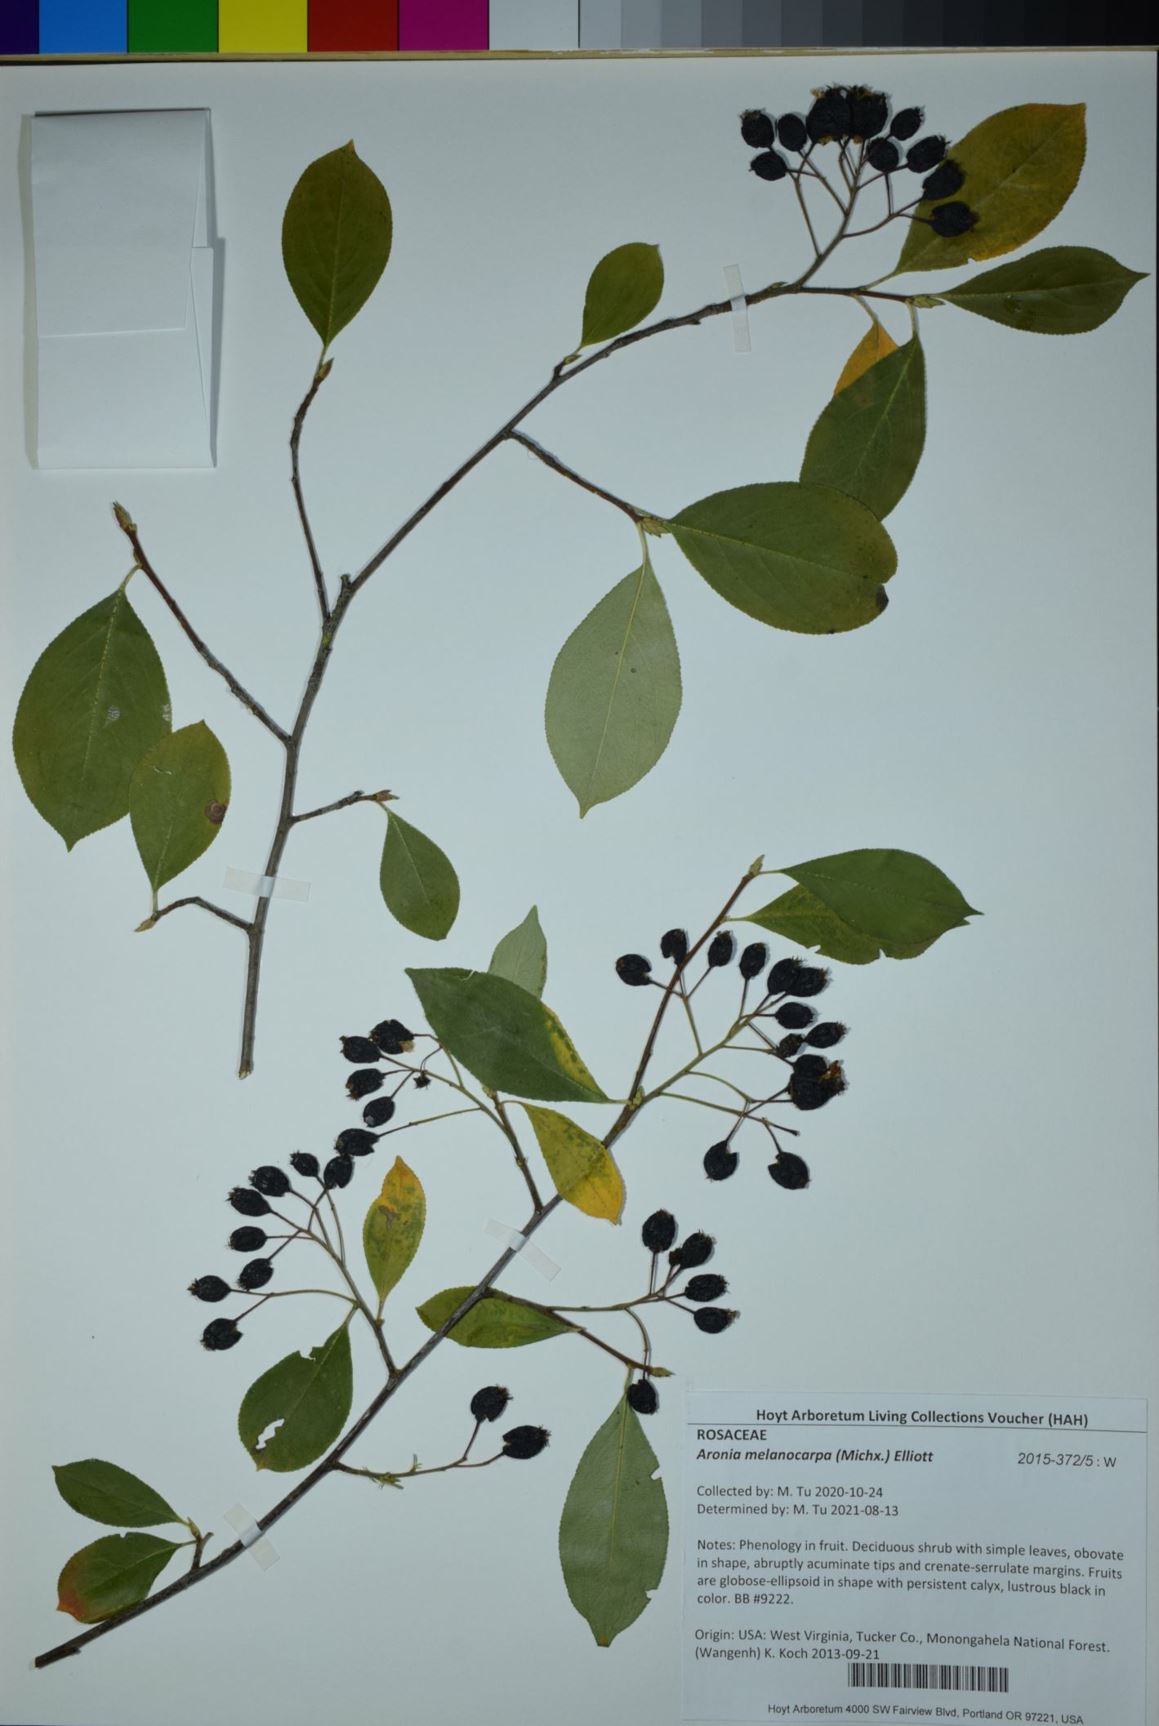 Aronia melanocarpa - black chokeberry